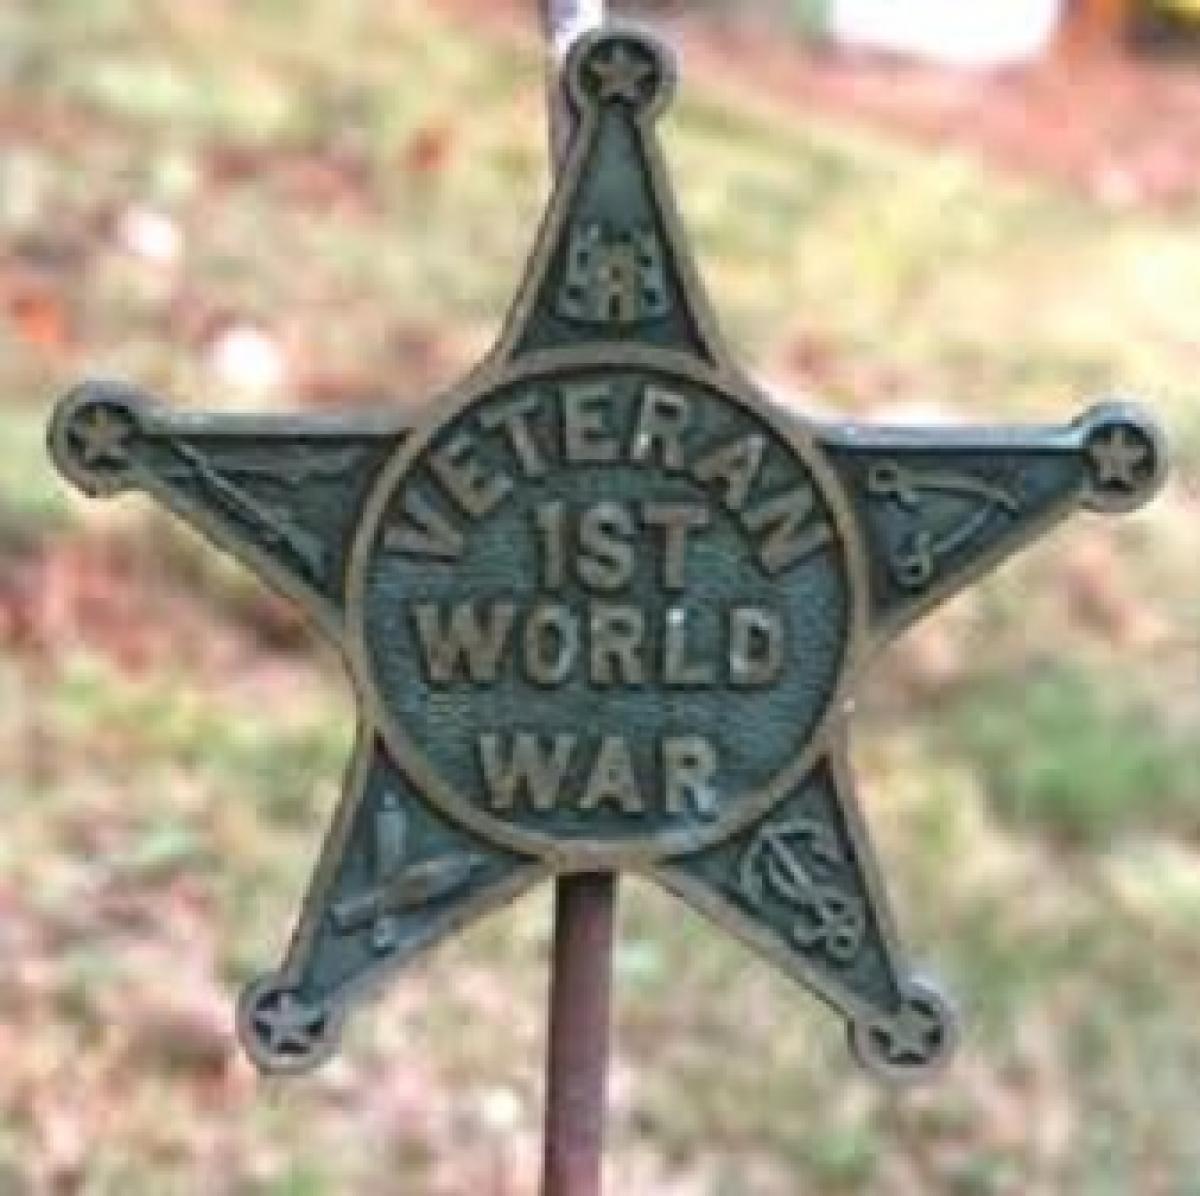 OK, Grove, Headstone Symbols and Meanings, Veteran, World War I